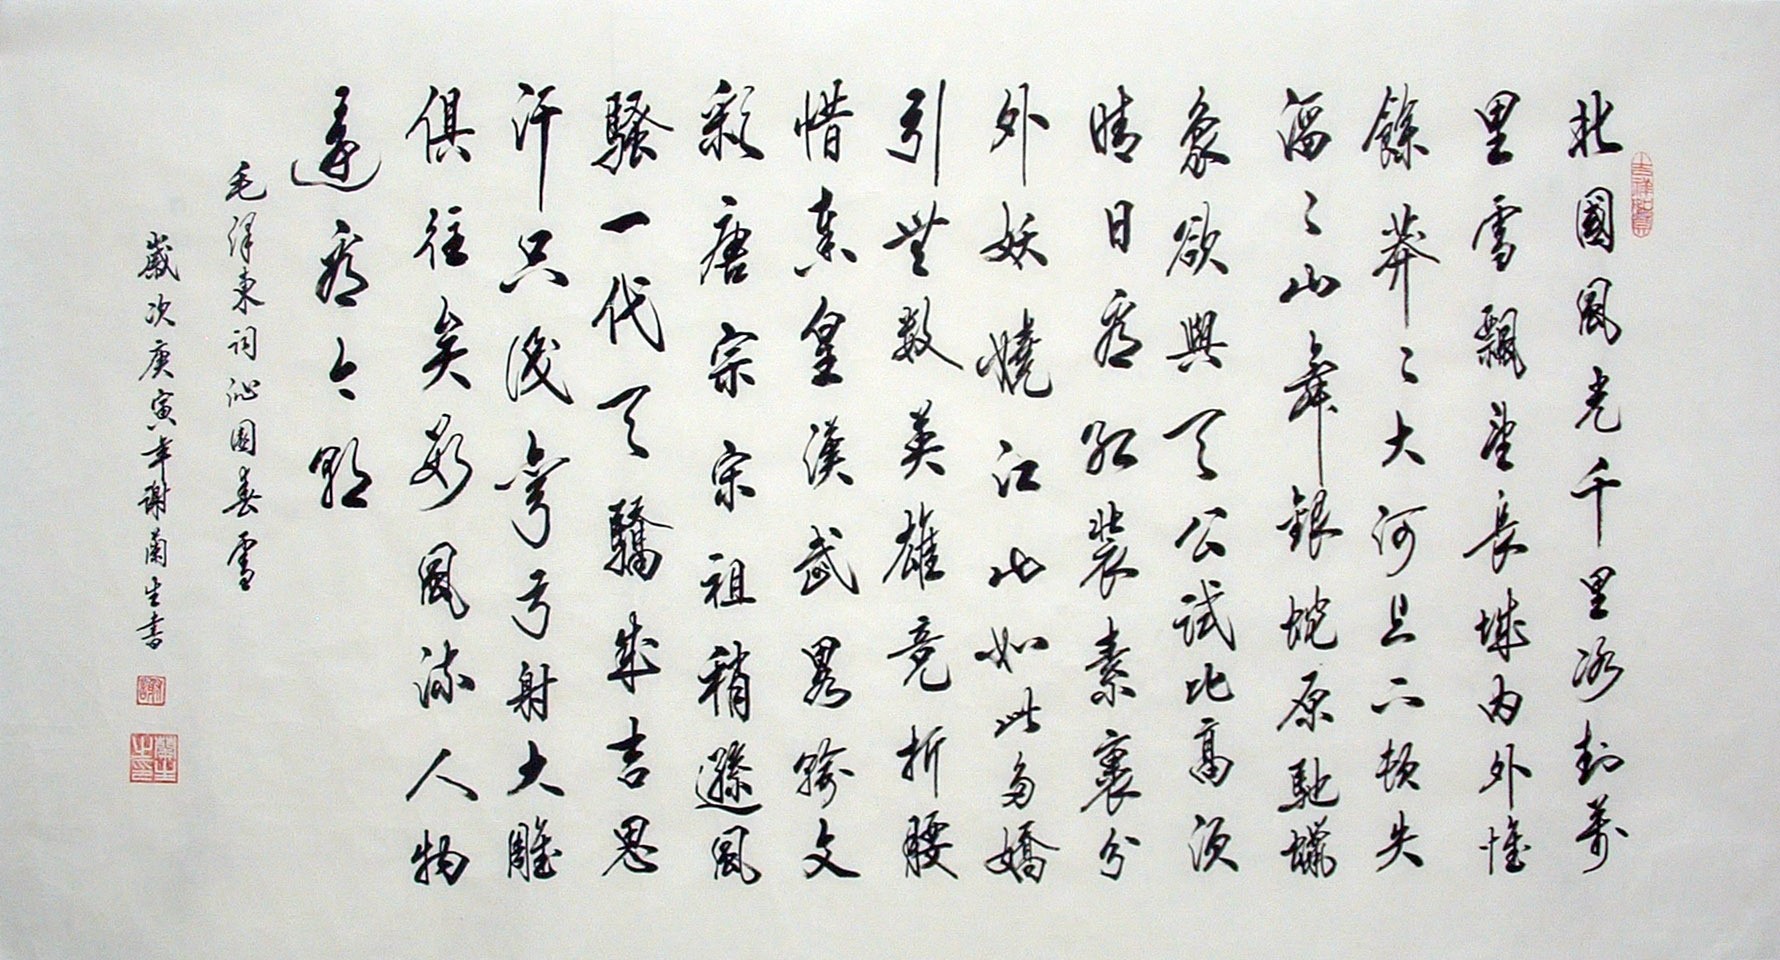 Chinese Cursive Scripts Painting - CNAG014467